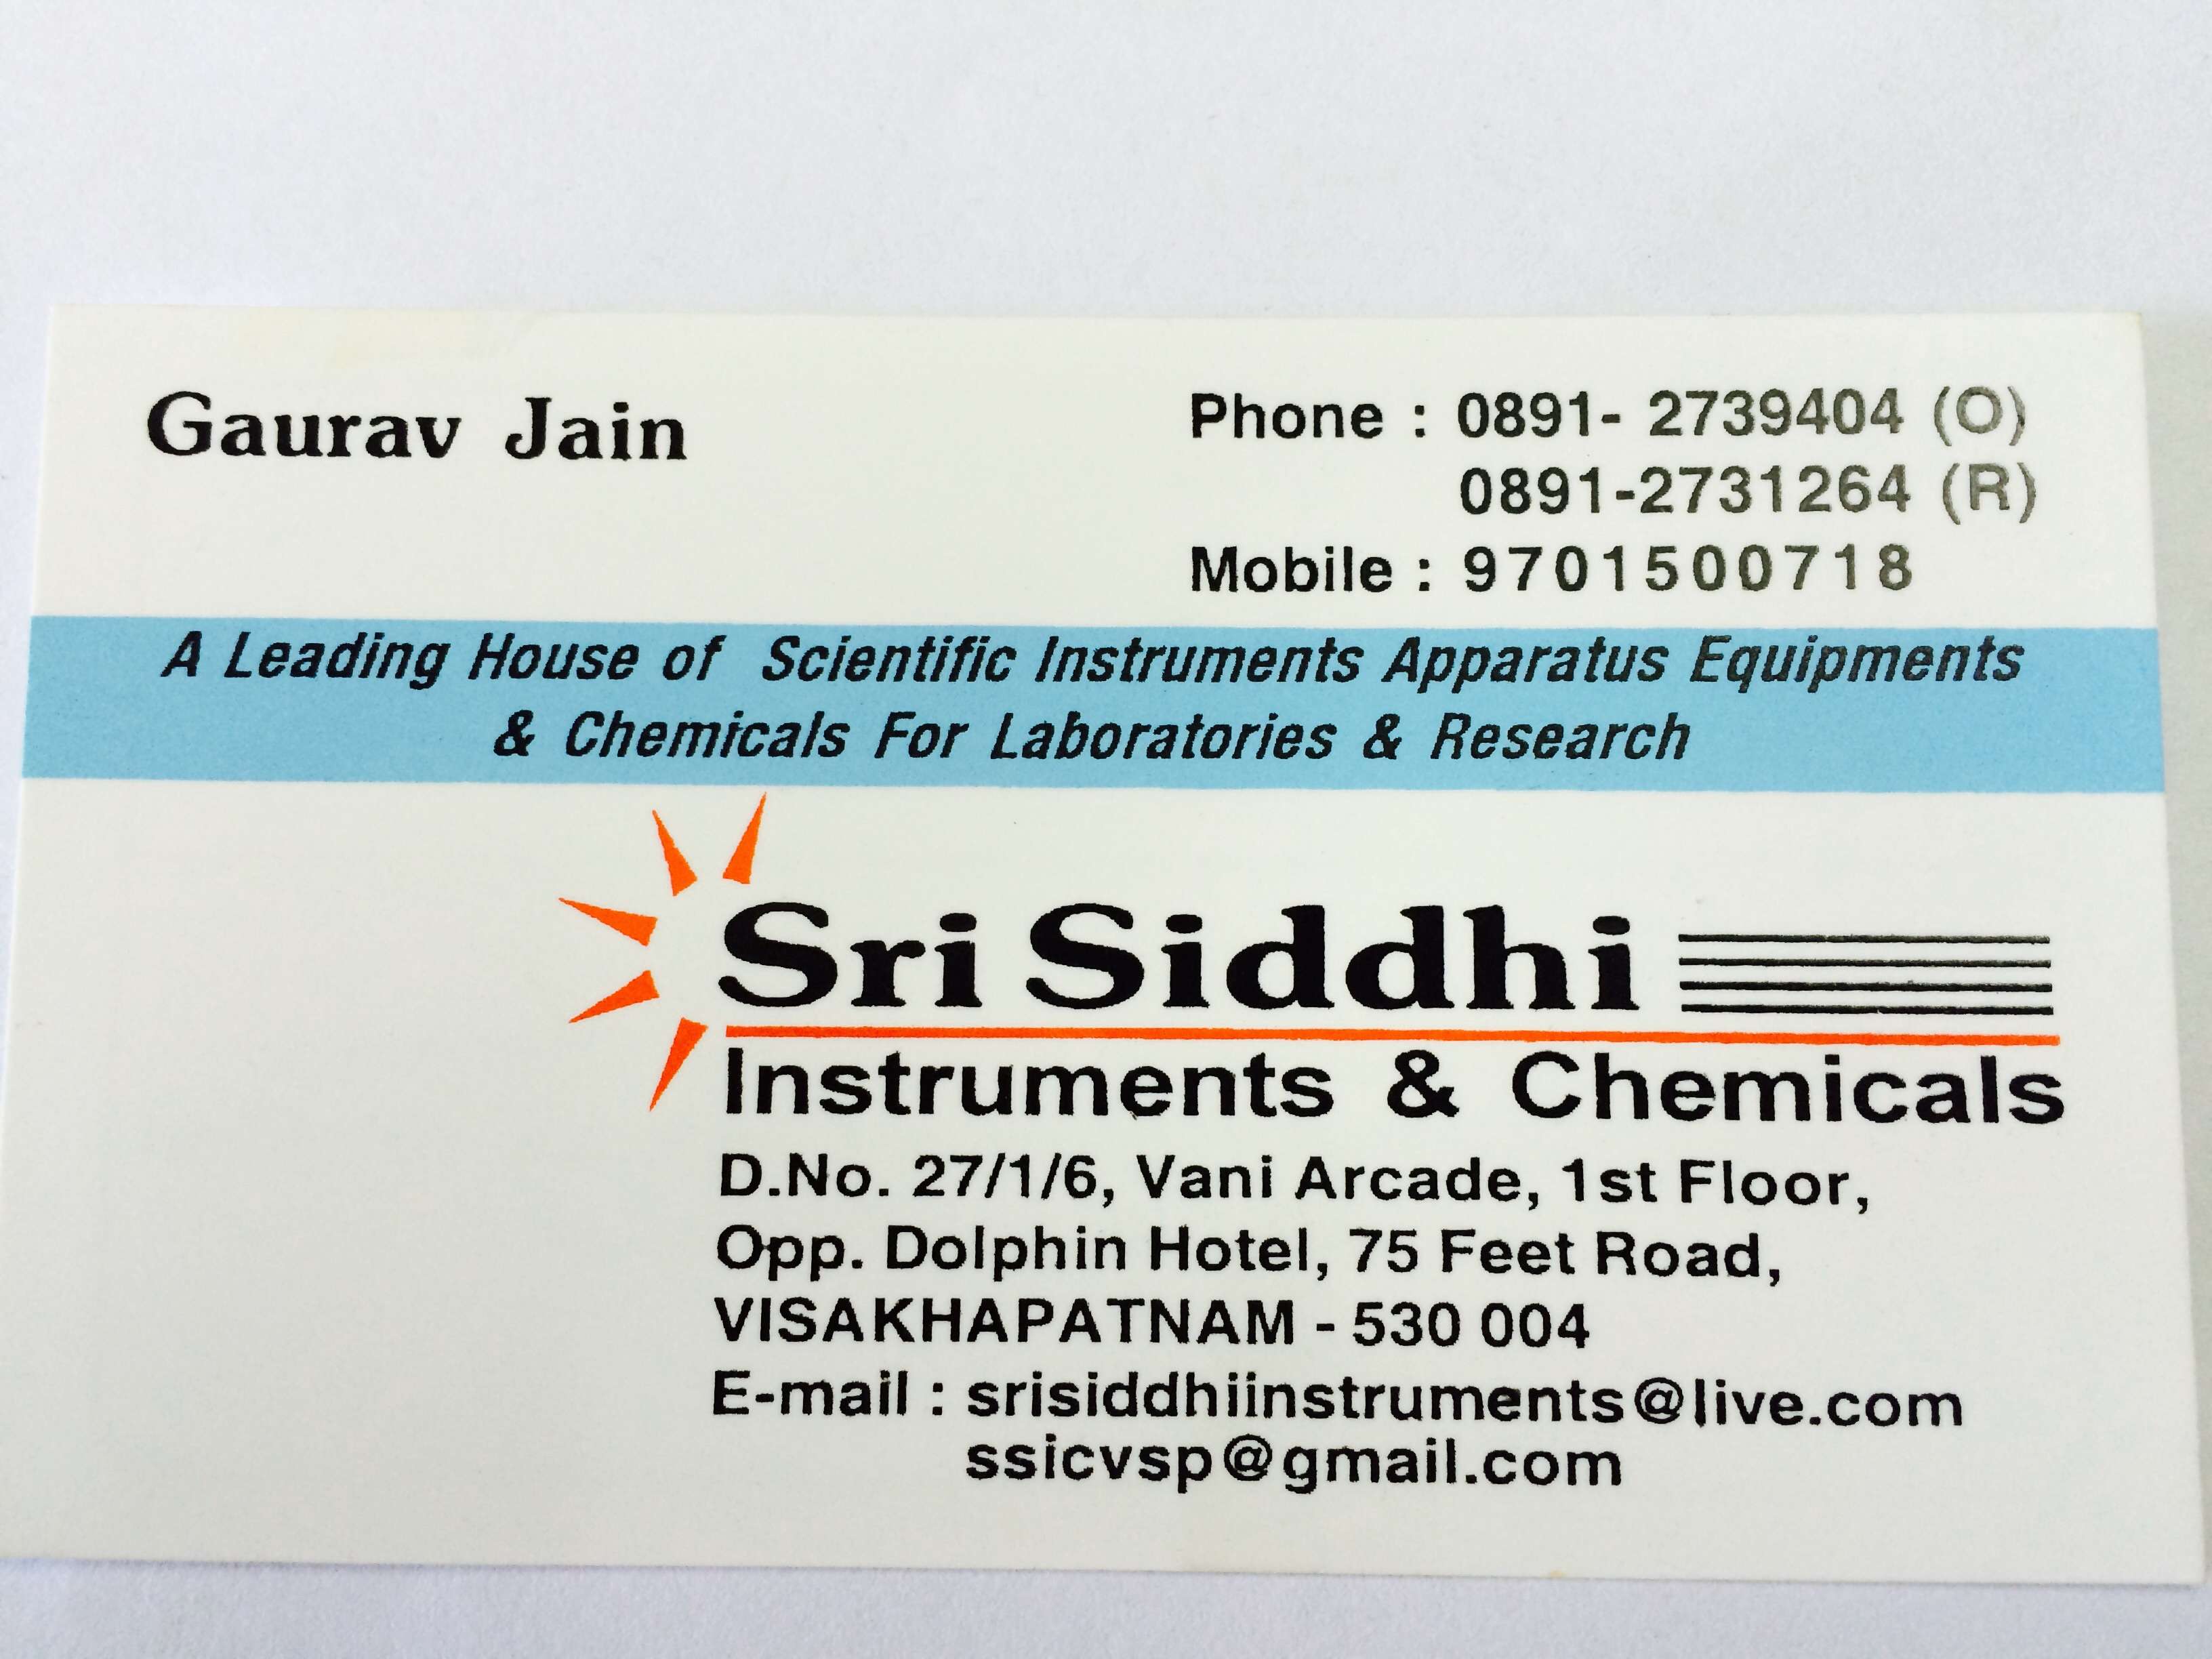 Sri Siddhi Instruments & Chemicals